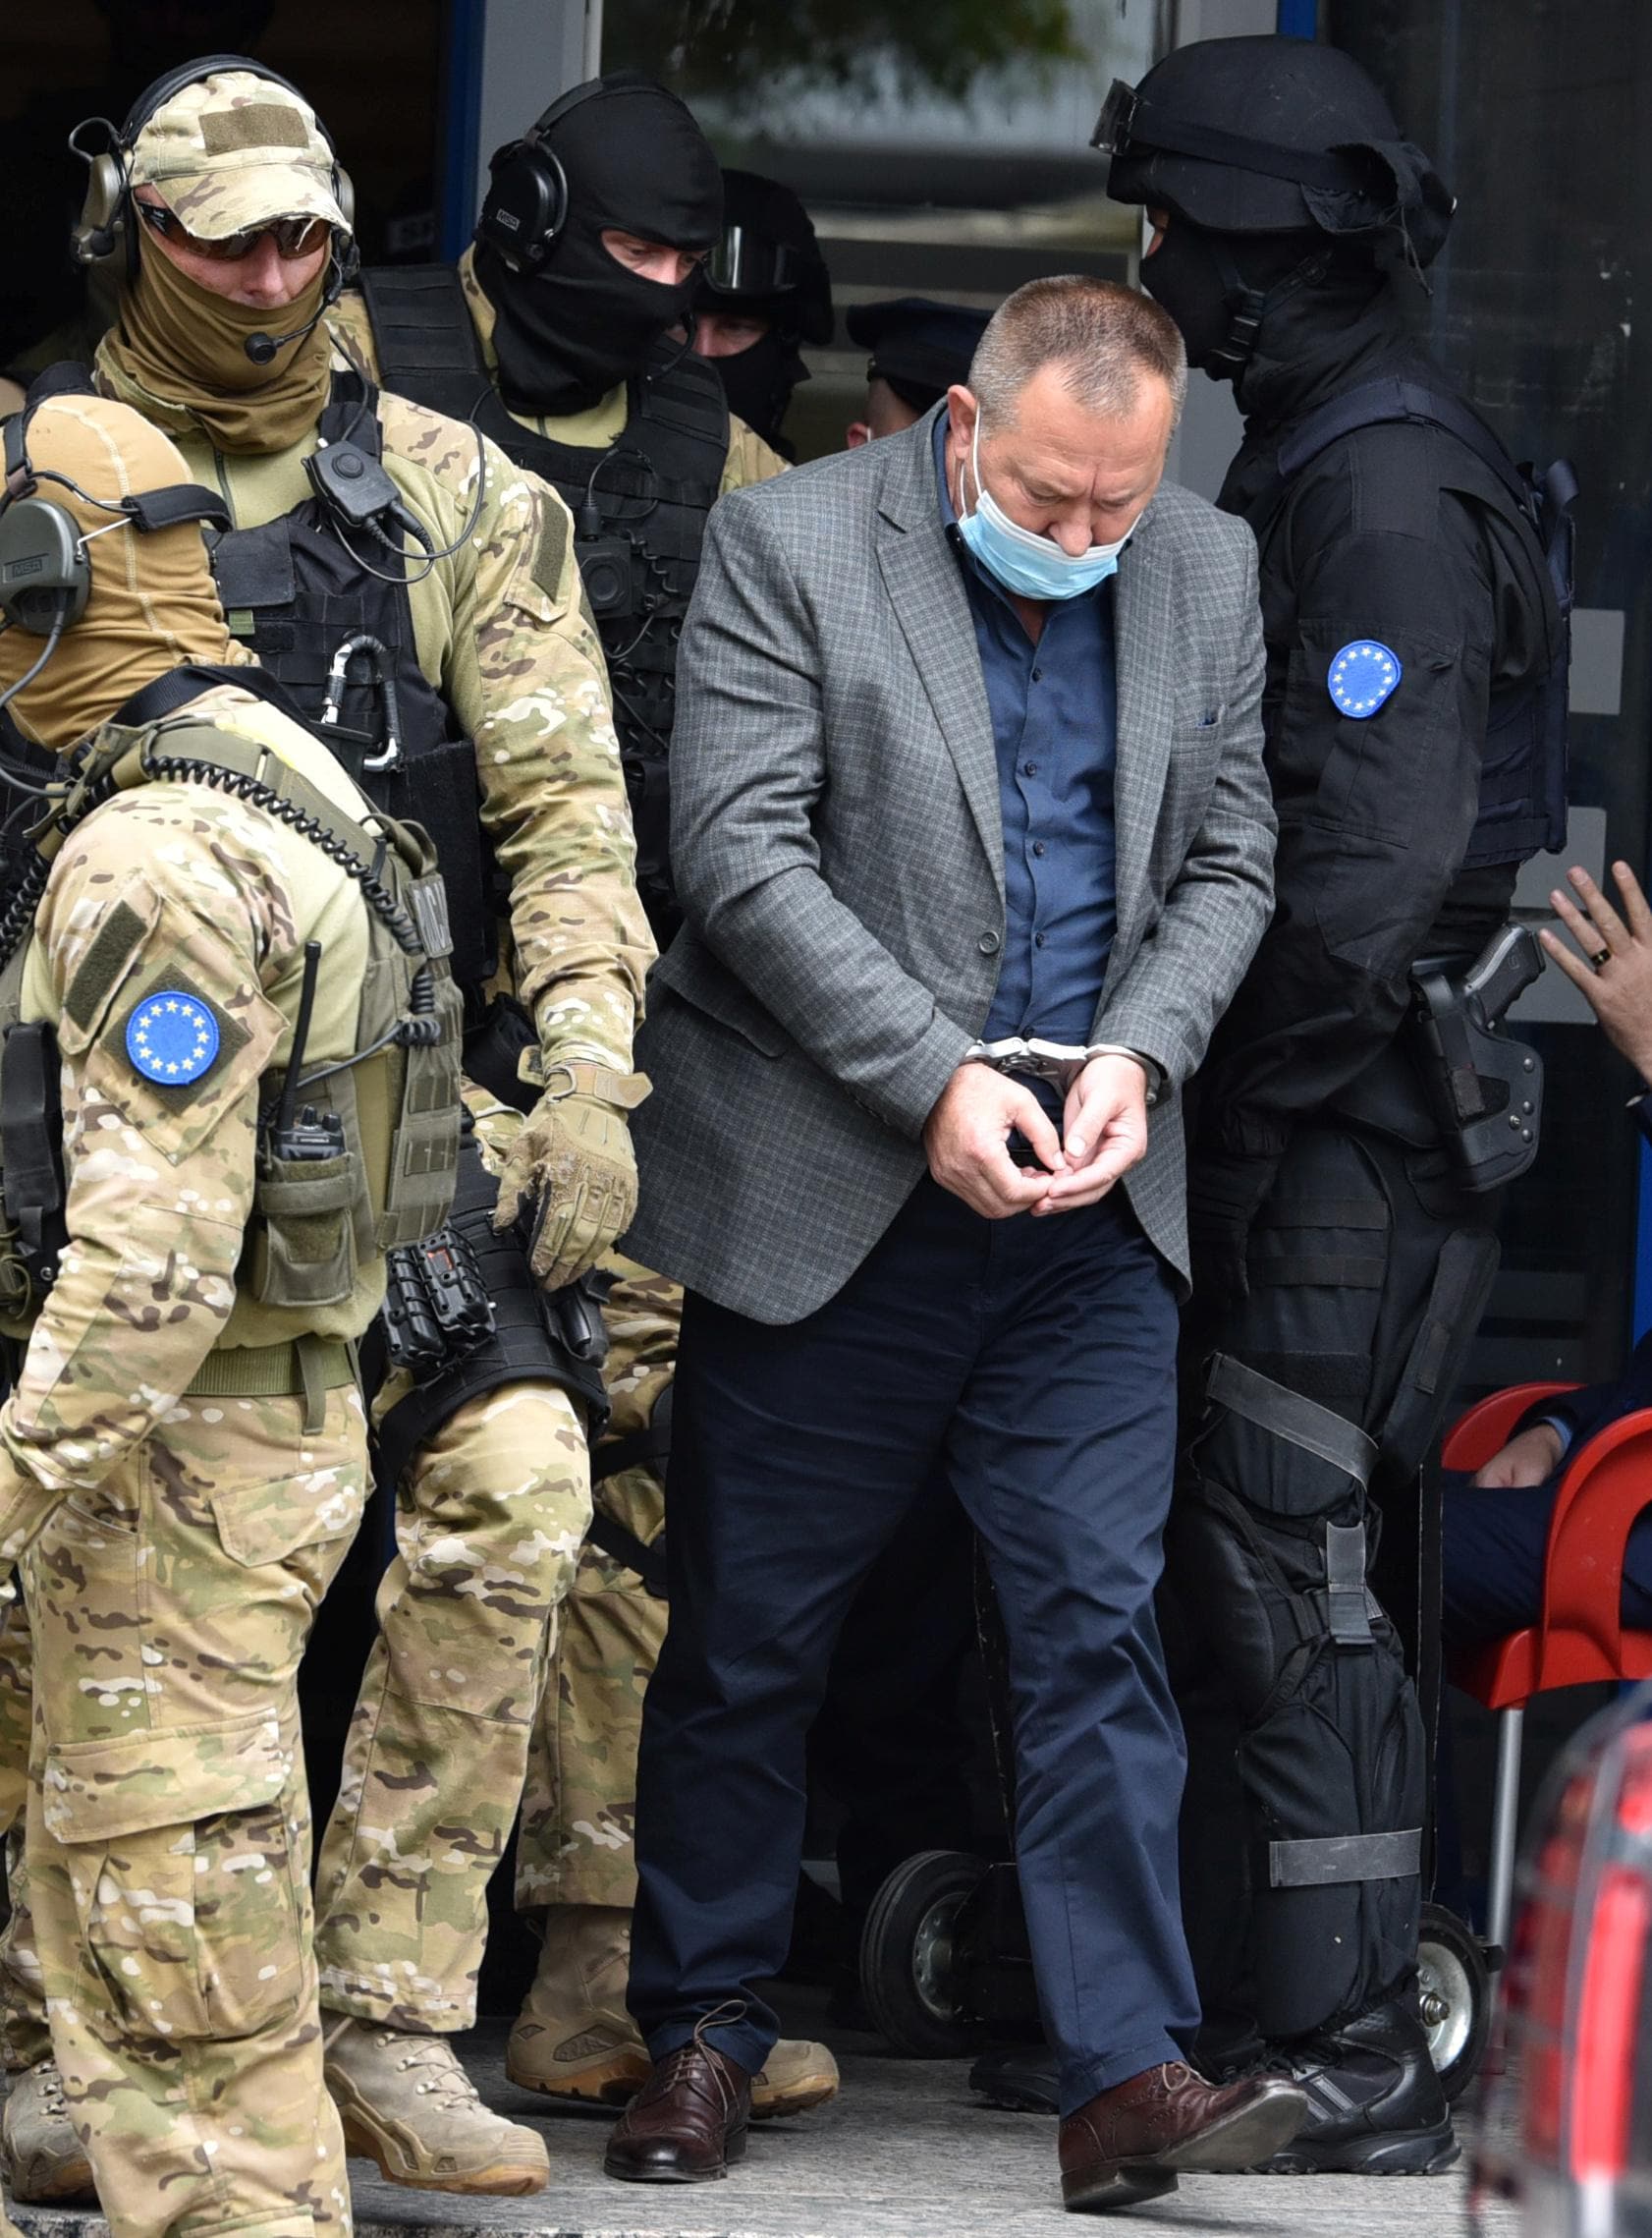 Kosovo veterans leader arrested on witness intimidation charges  tribunal